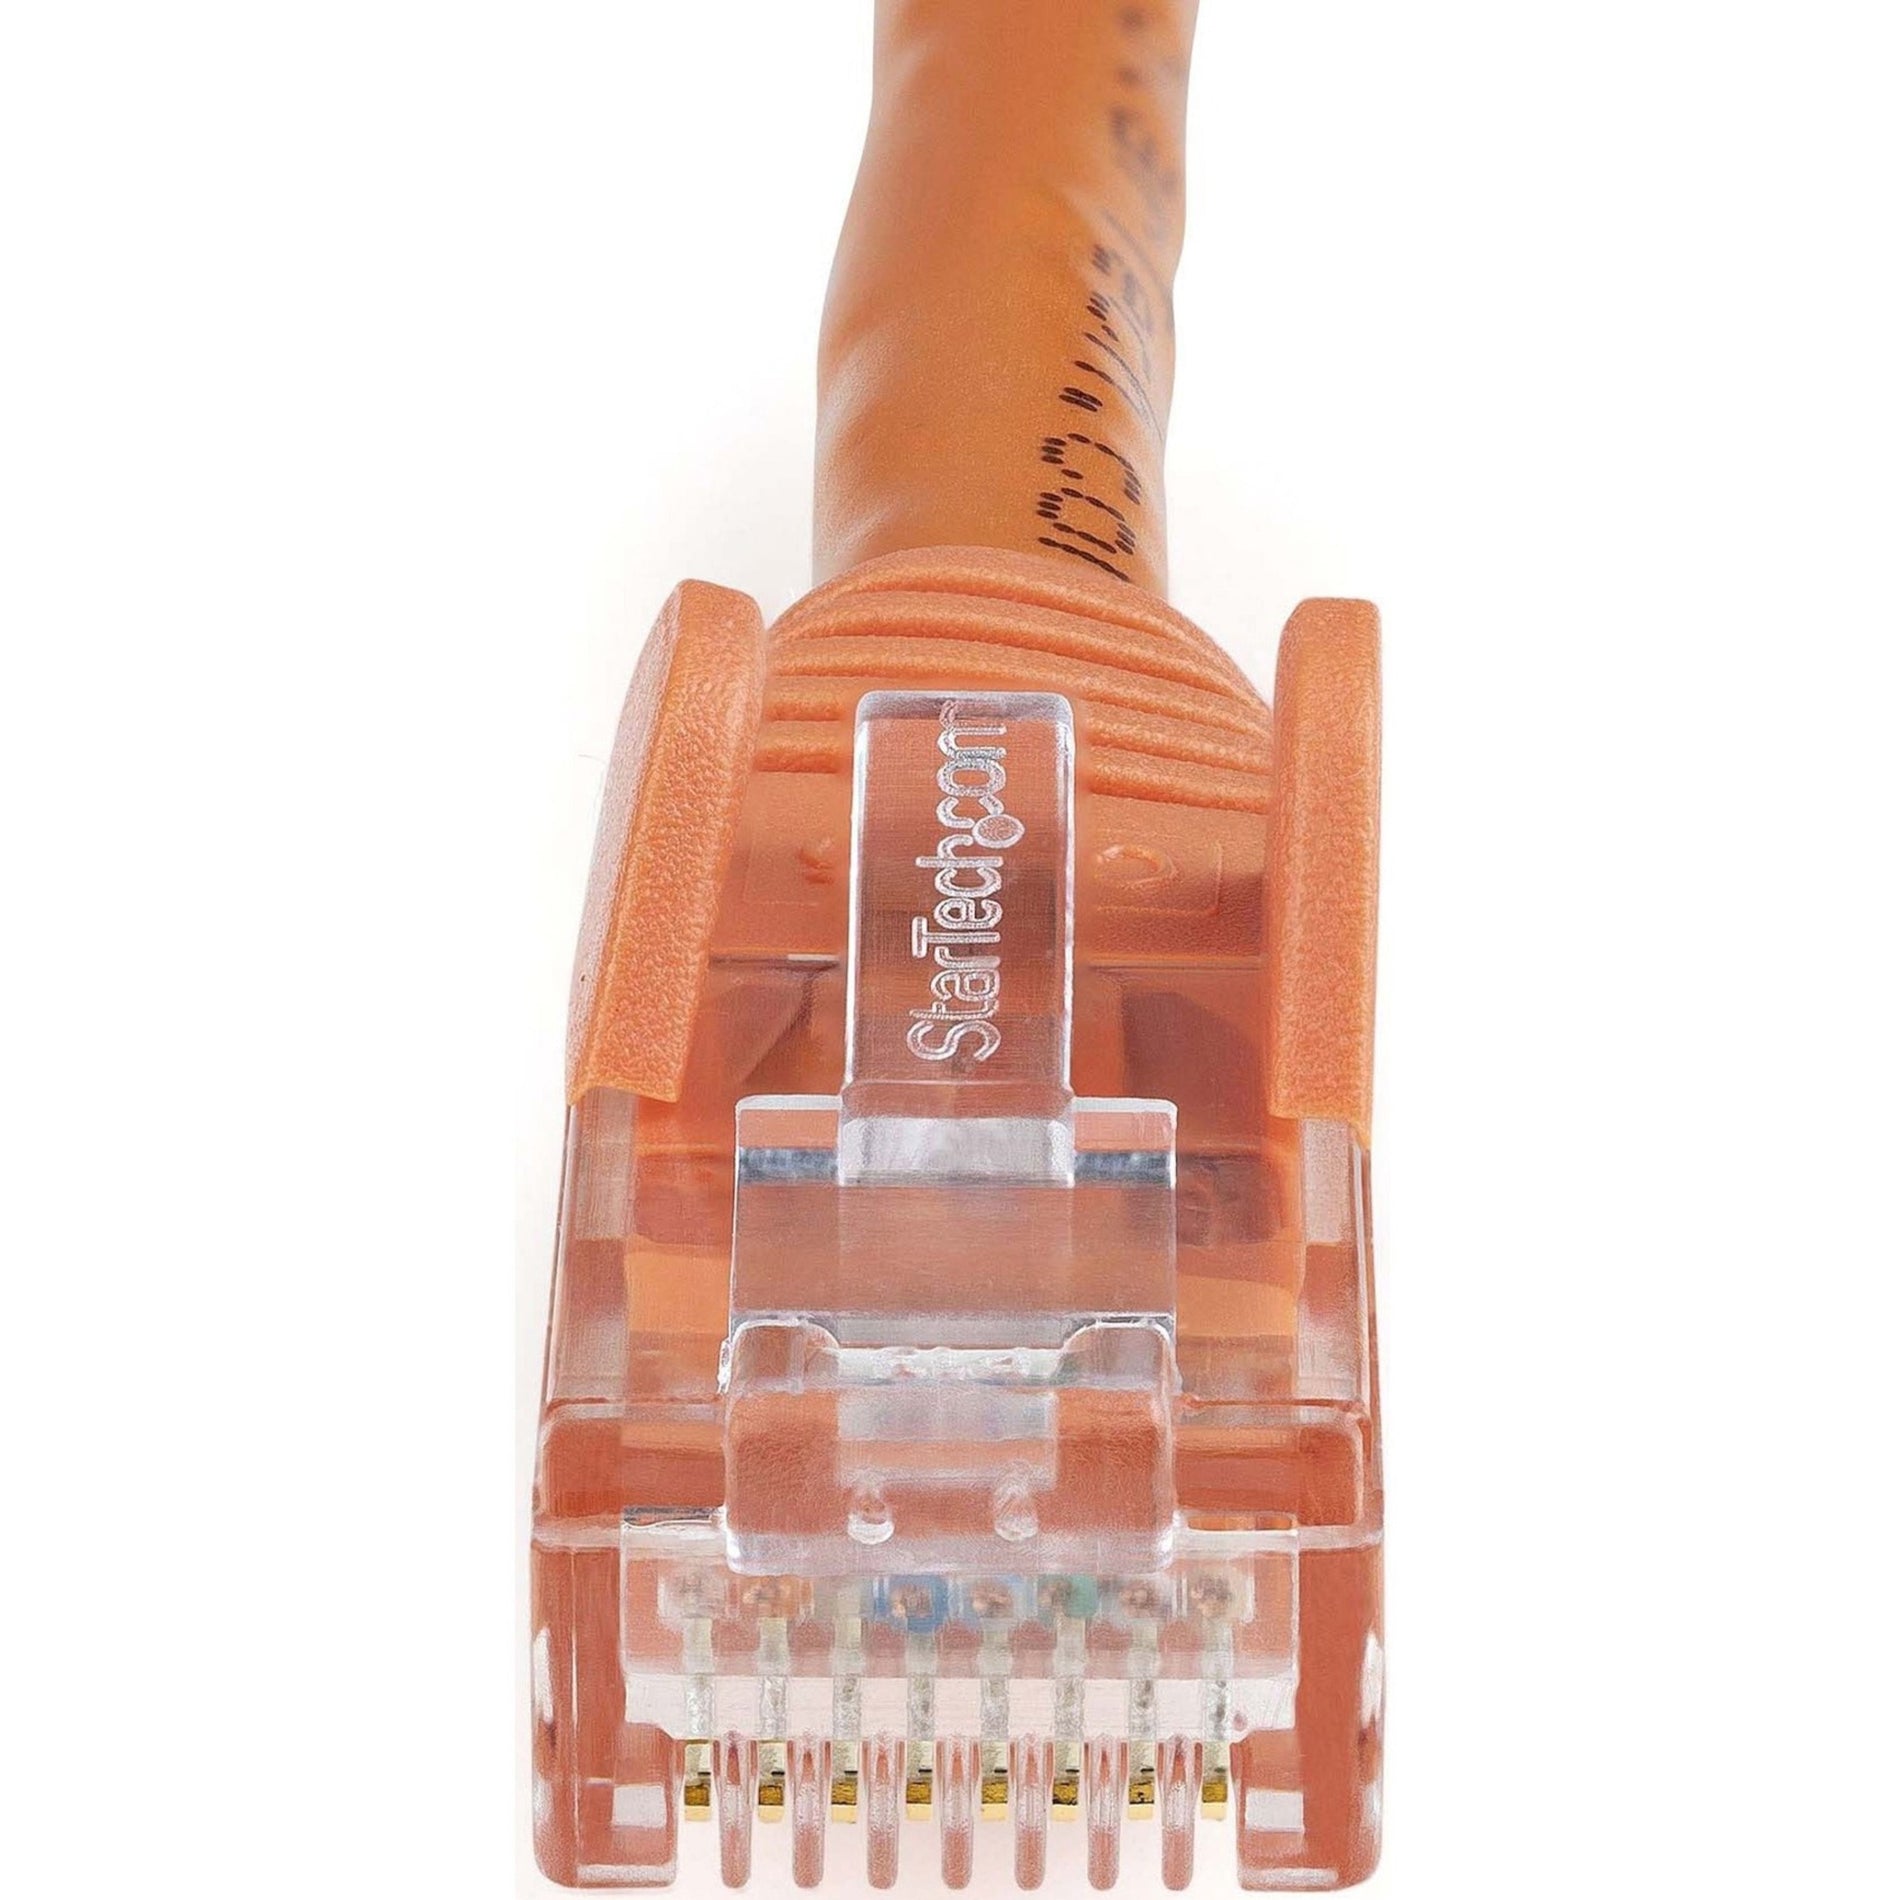 StarTech.com N6PATCH7OR 7 ft Orange Snagless Cat6 UTP Patch Cable, Lifetime Warranty, ETL Verified, 10 Gbit/s Data Transfer Rate